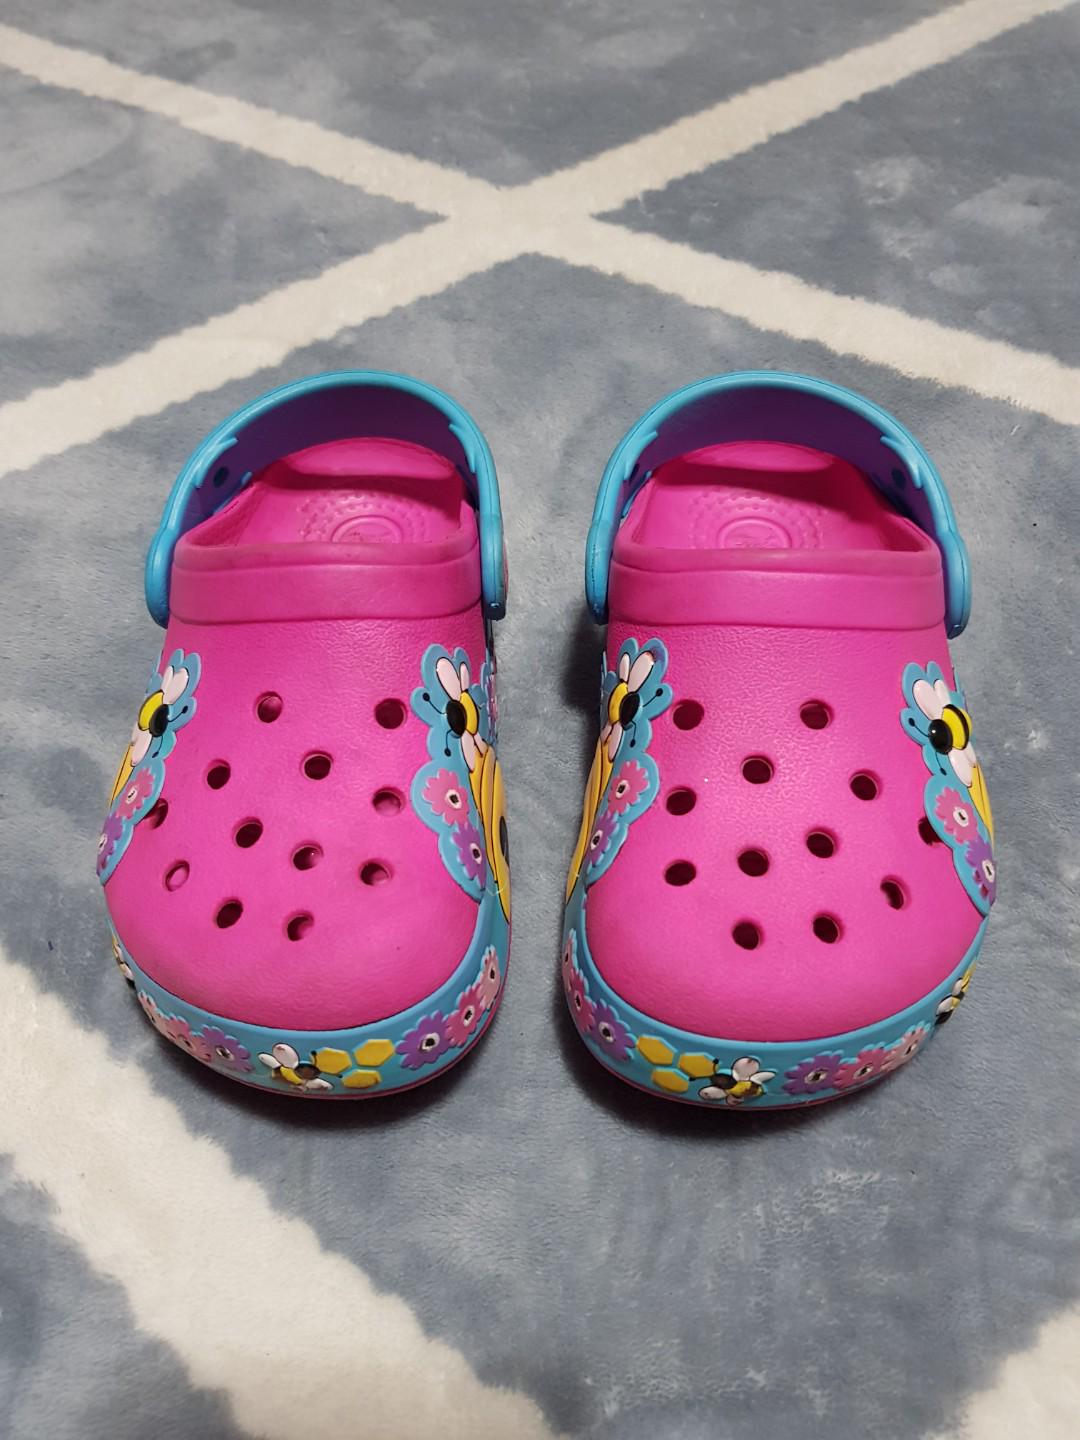 crocs for kids size 4